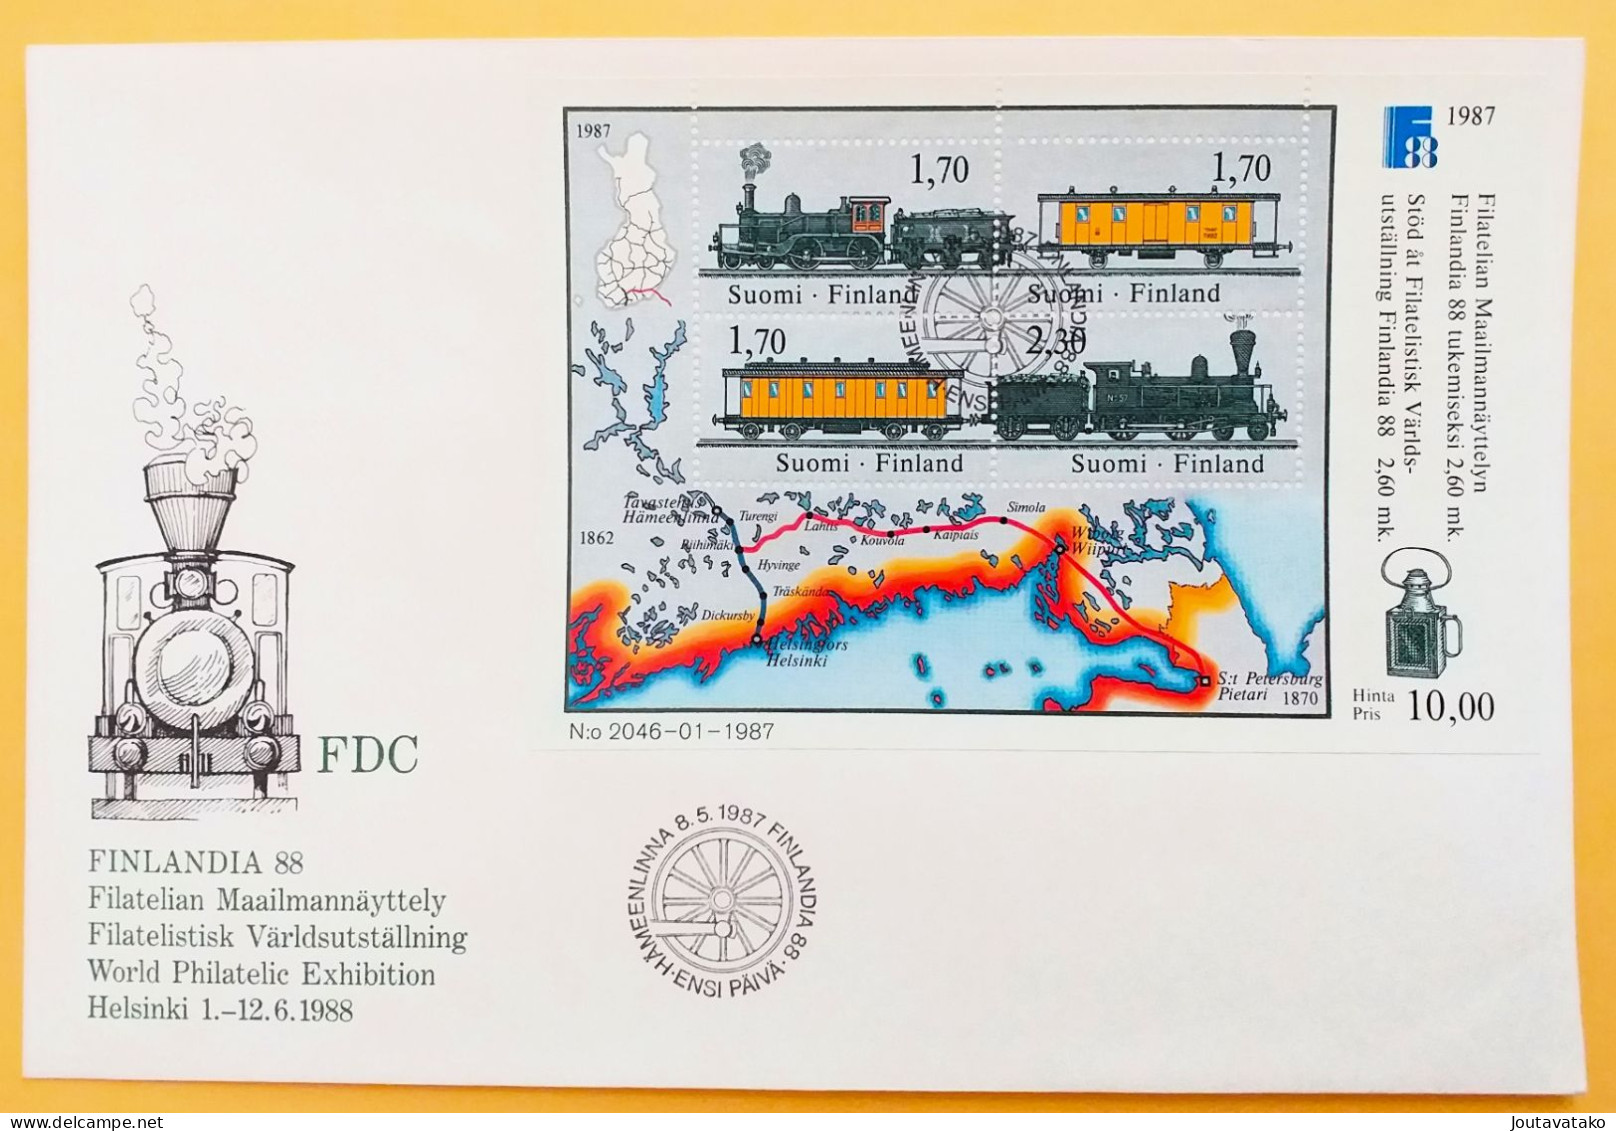 Finland FDC 1987 - Stamp Exhibition FINLANDIA '88 - Trains, Locomotive, Mail Carriage - MiNo Block 3 - FDC